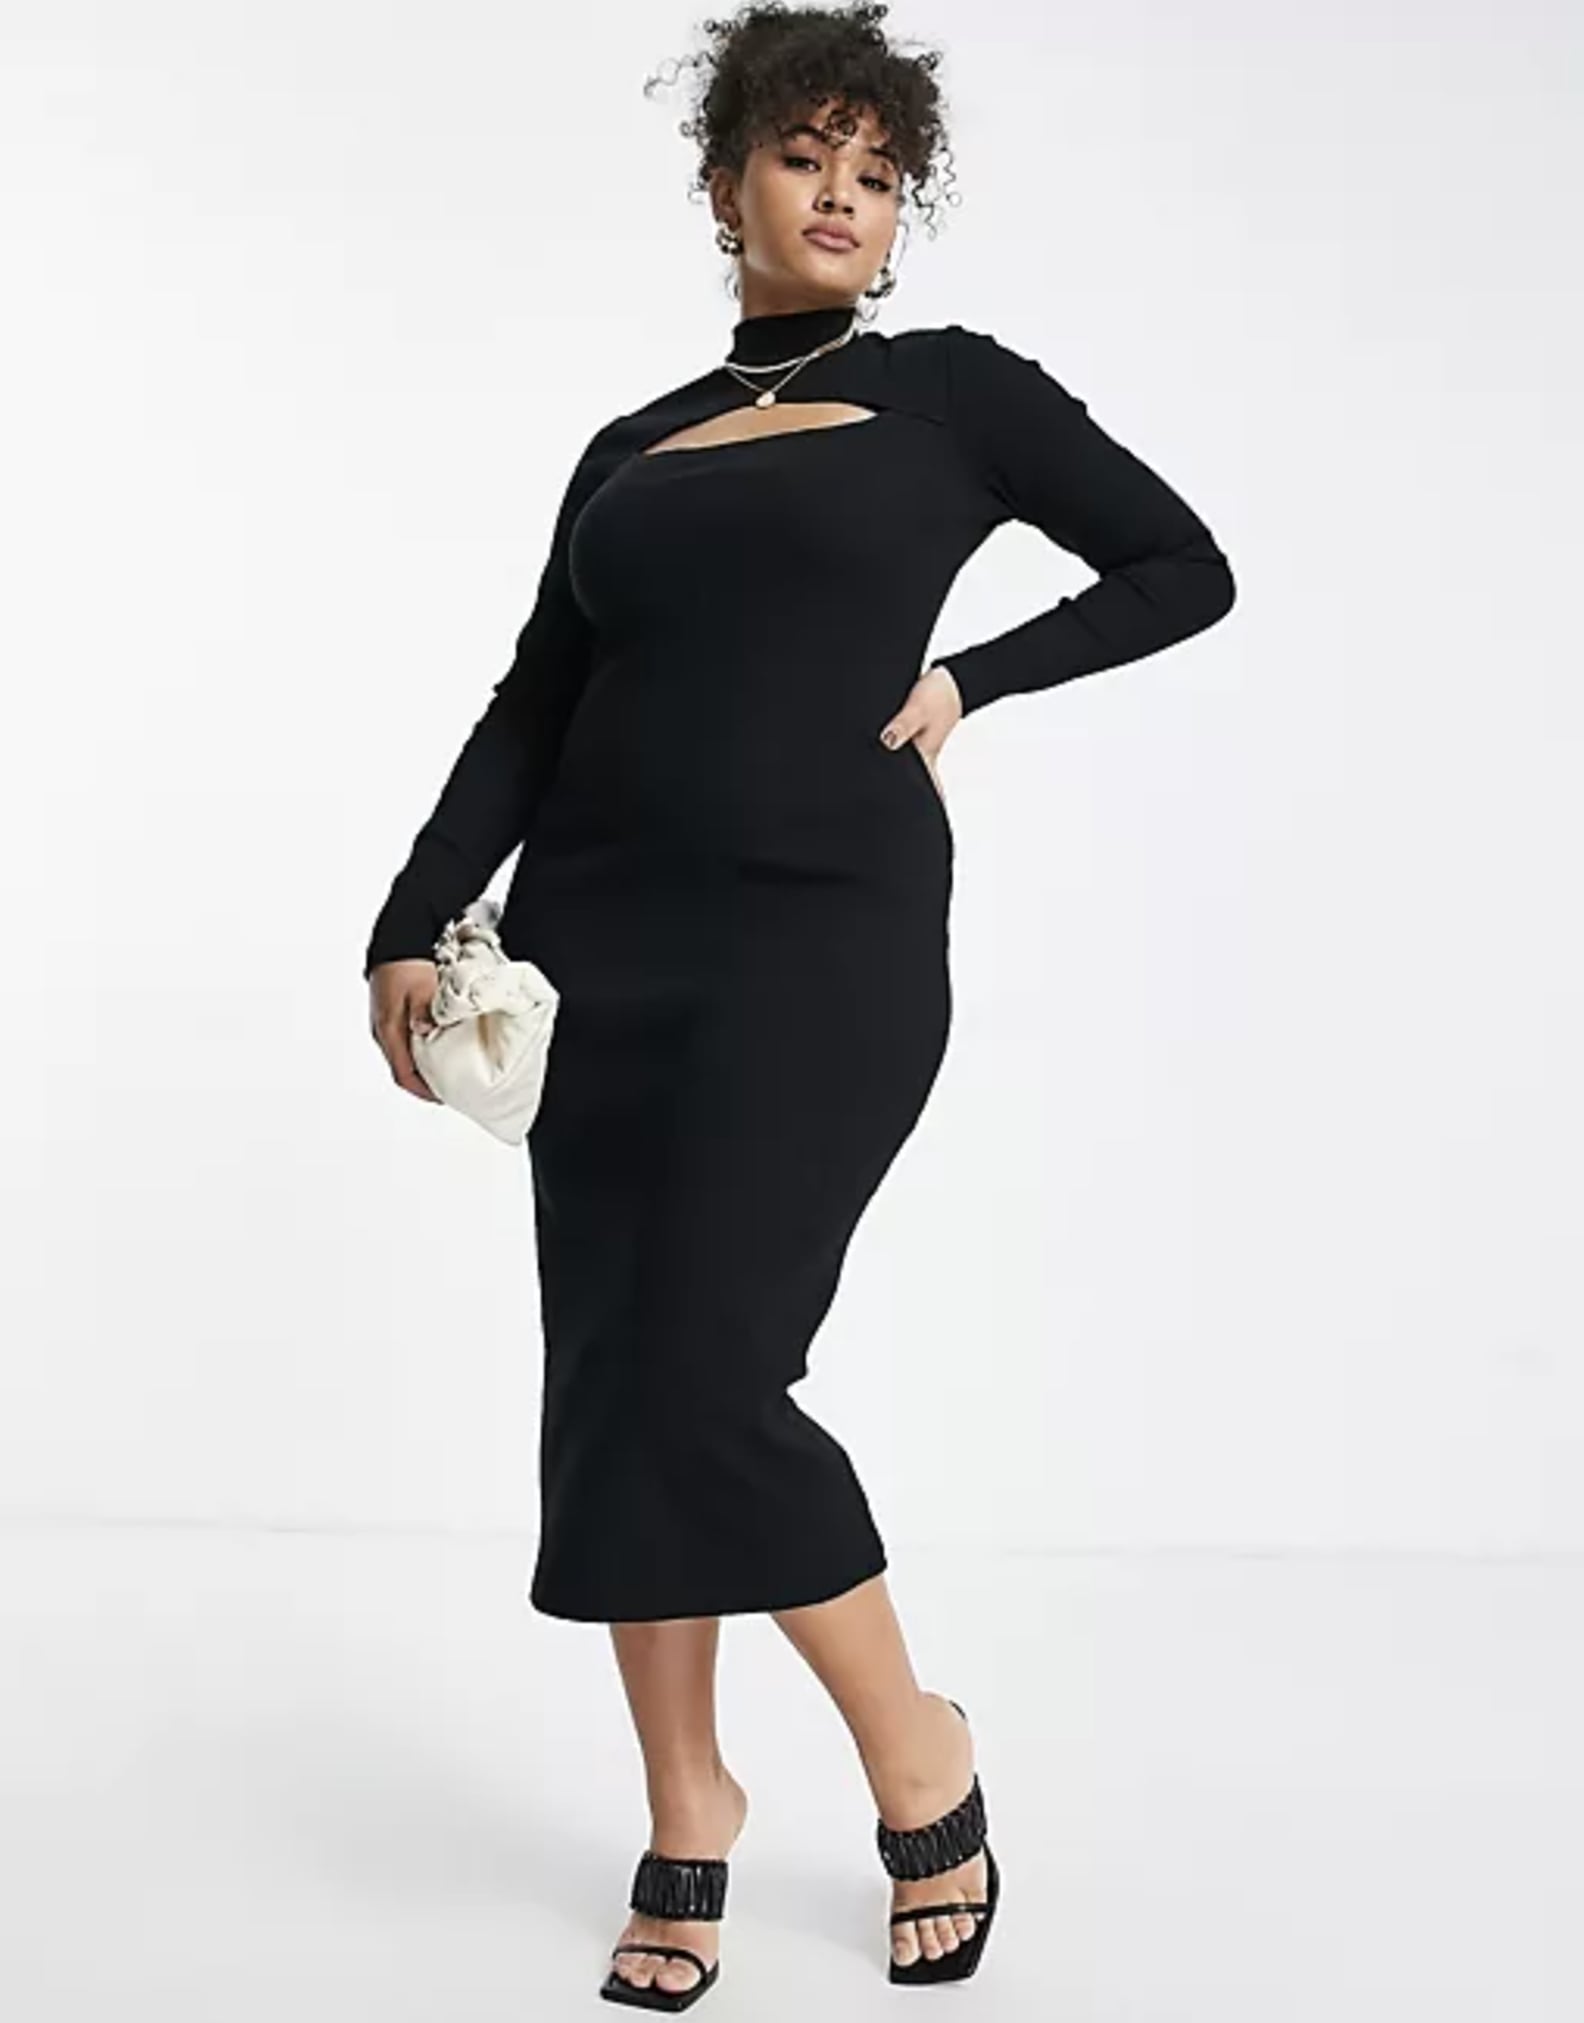 Priyanka Chopra's Black Lace-Back Dress For Date Night | POPSUGAR Fashion